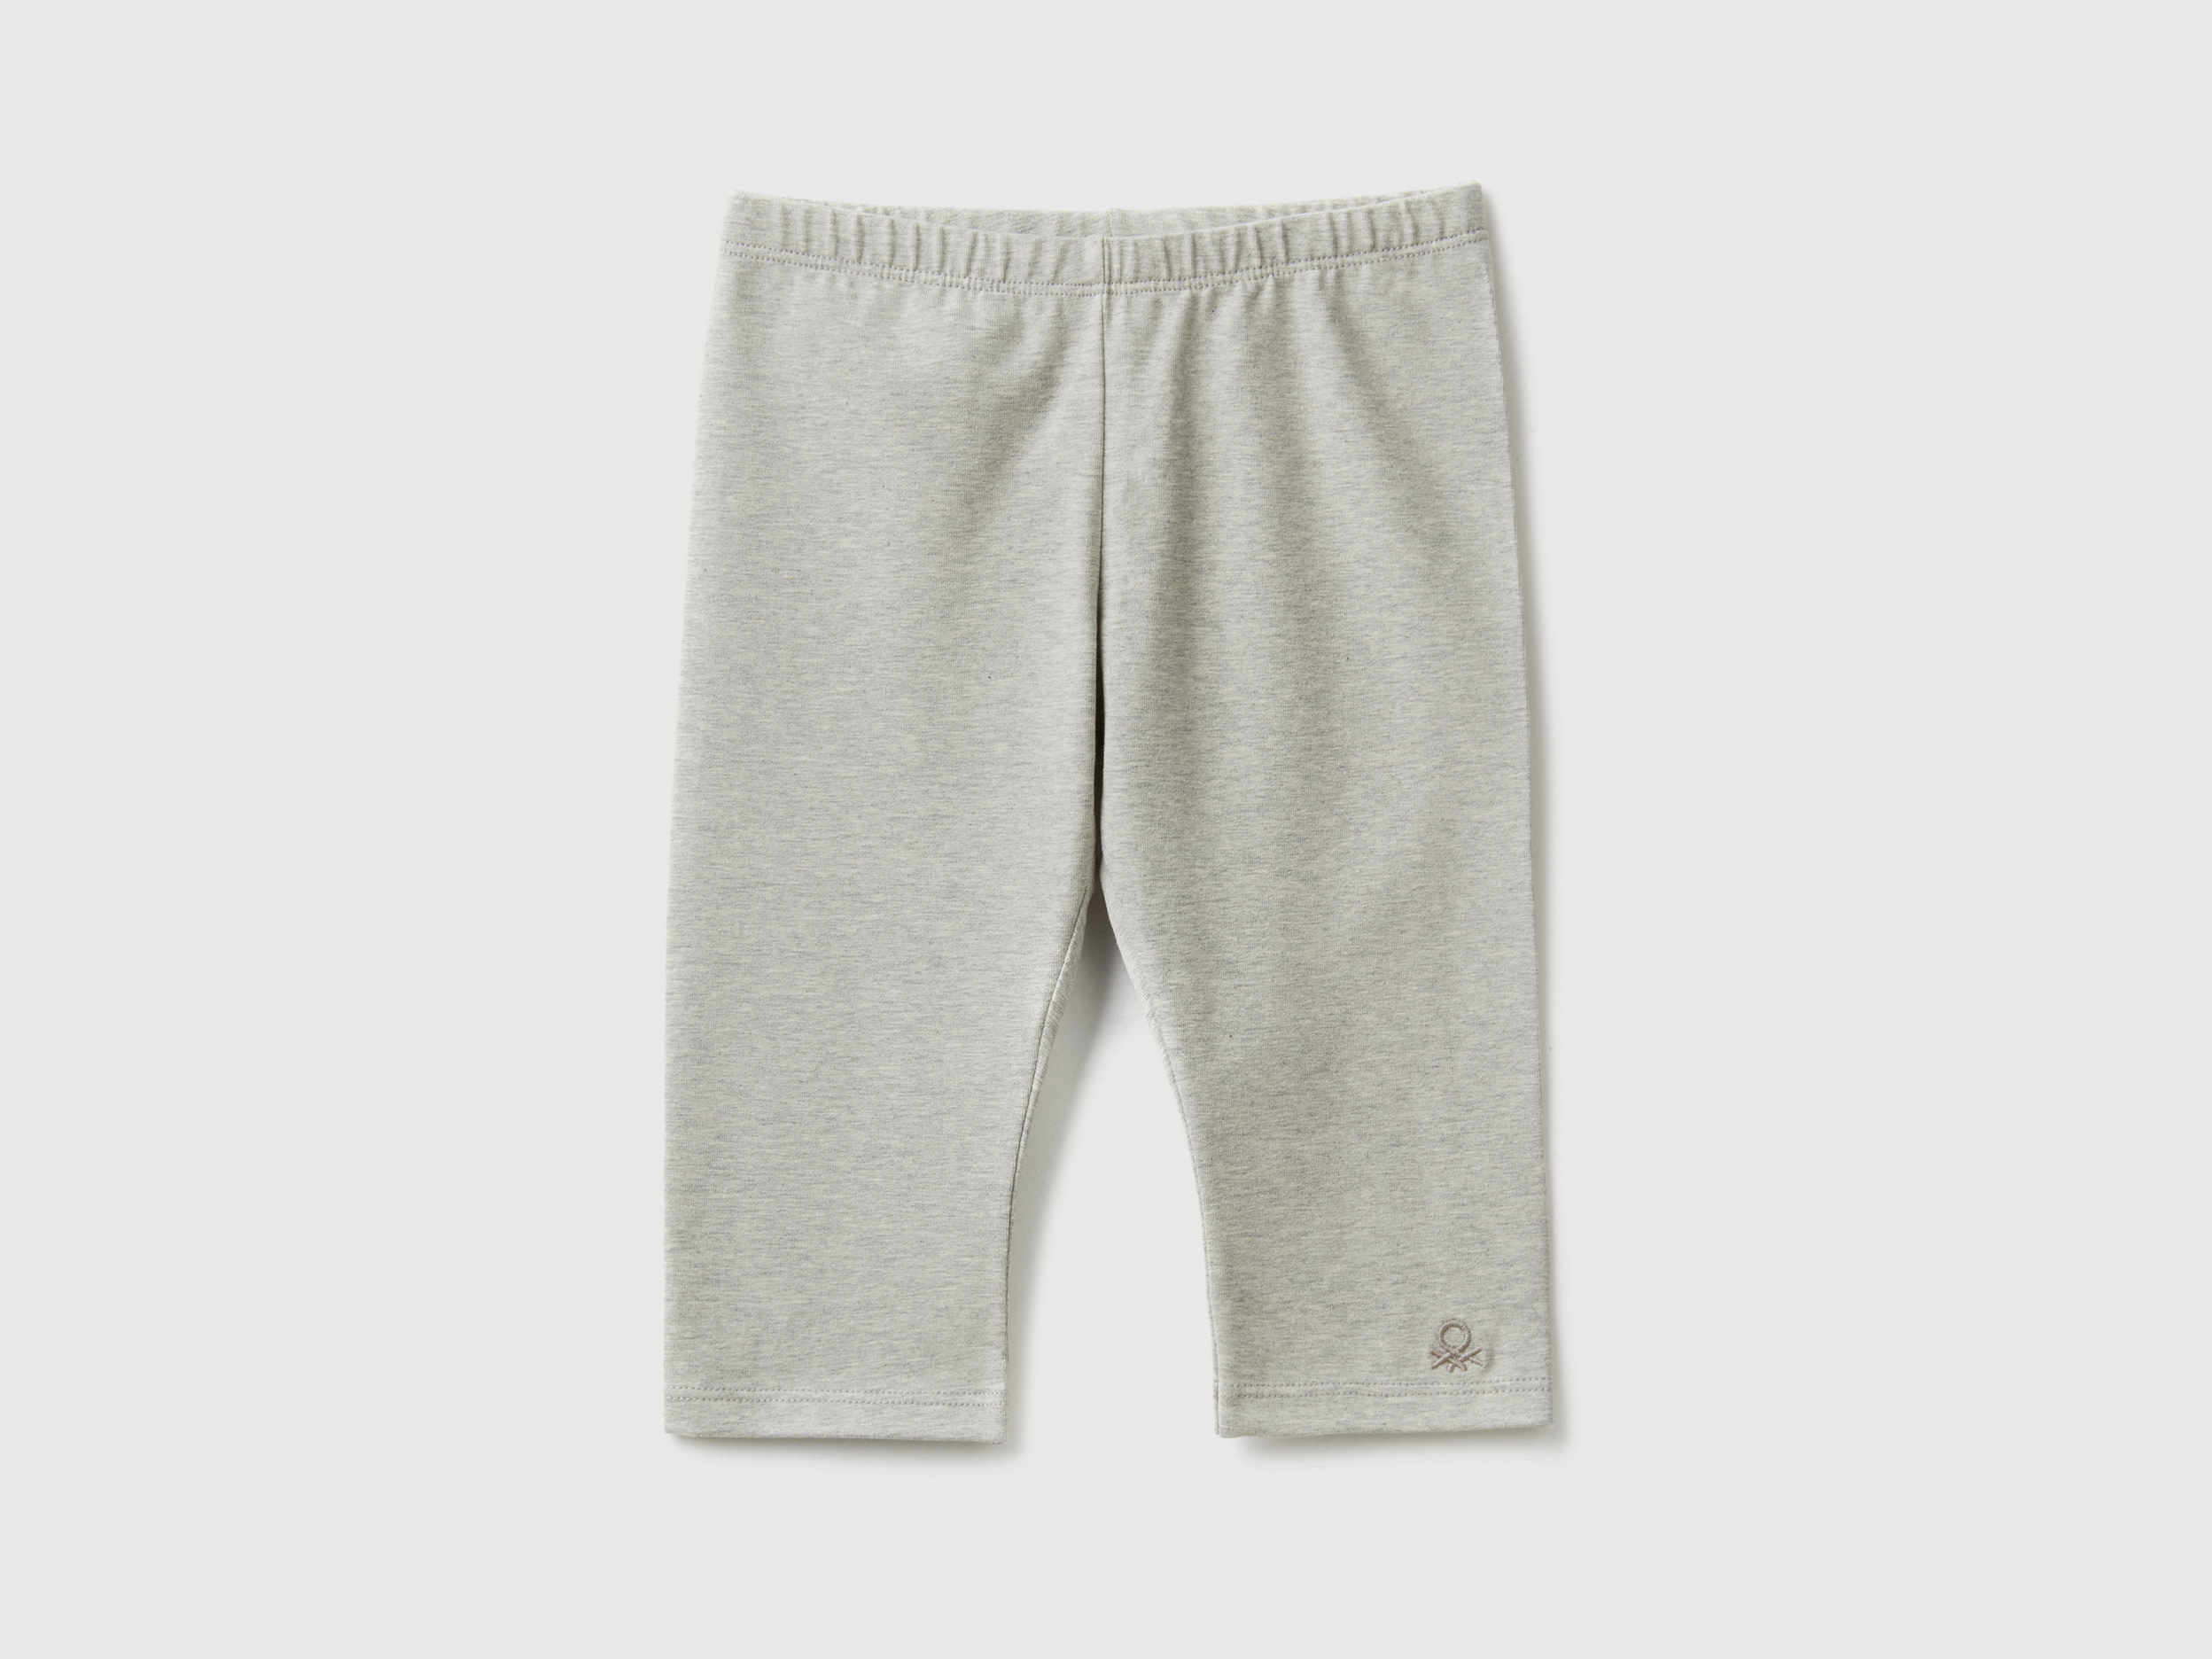 Benetton, 3/4 Leggings In Stretch Cotton, size 3-4, Light Gray, Kids